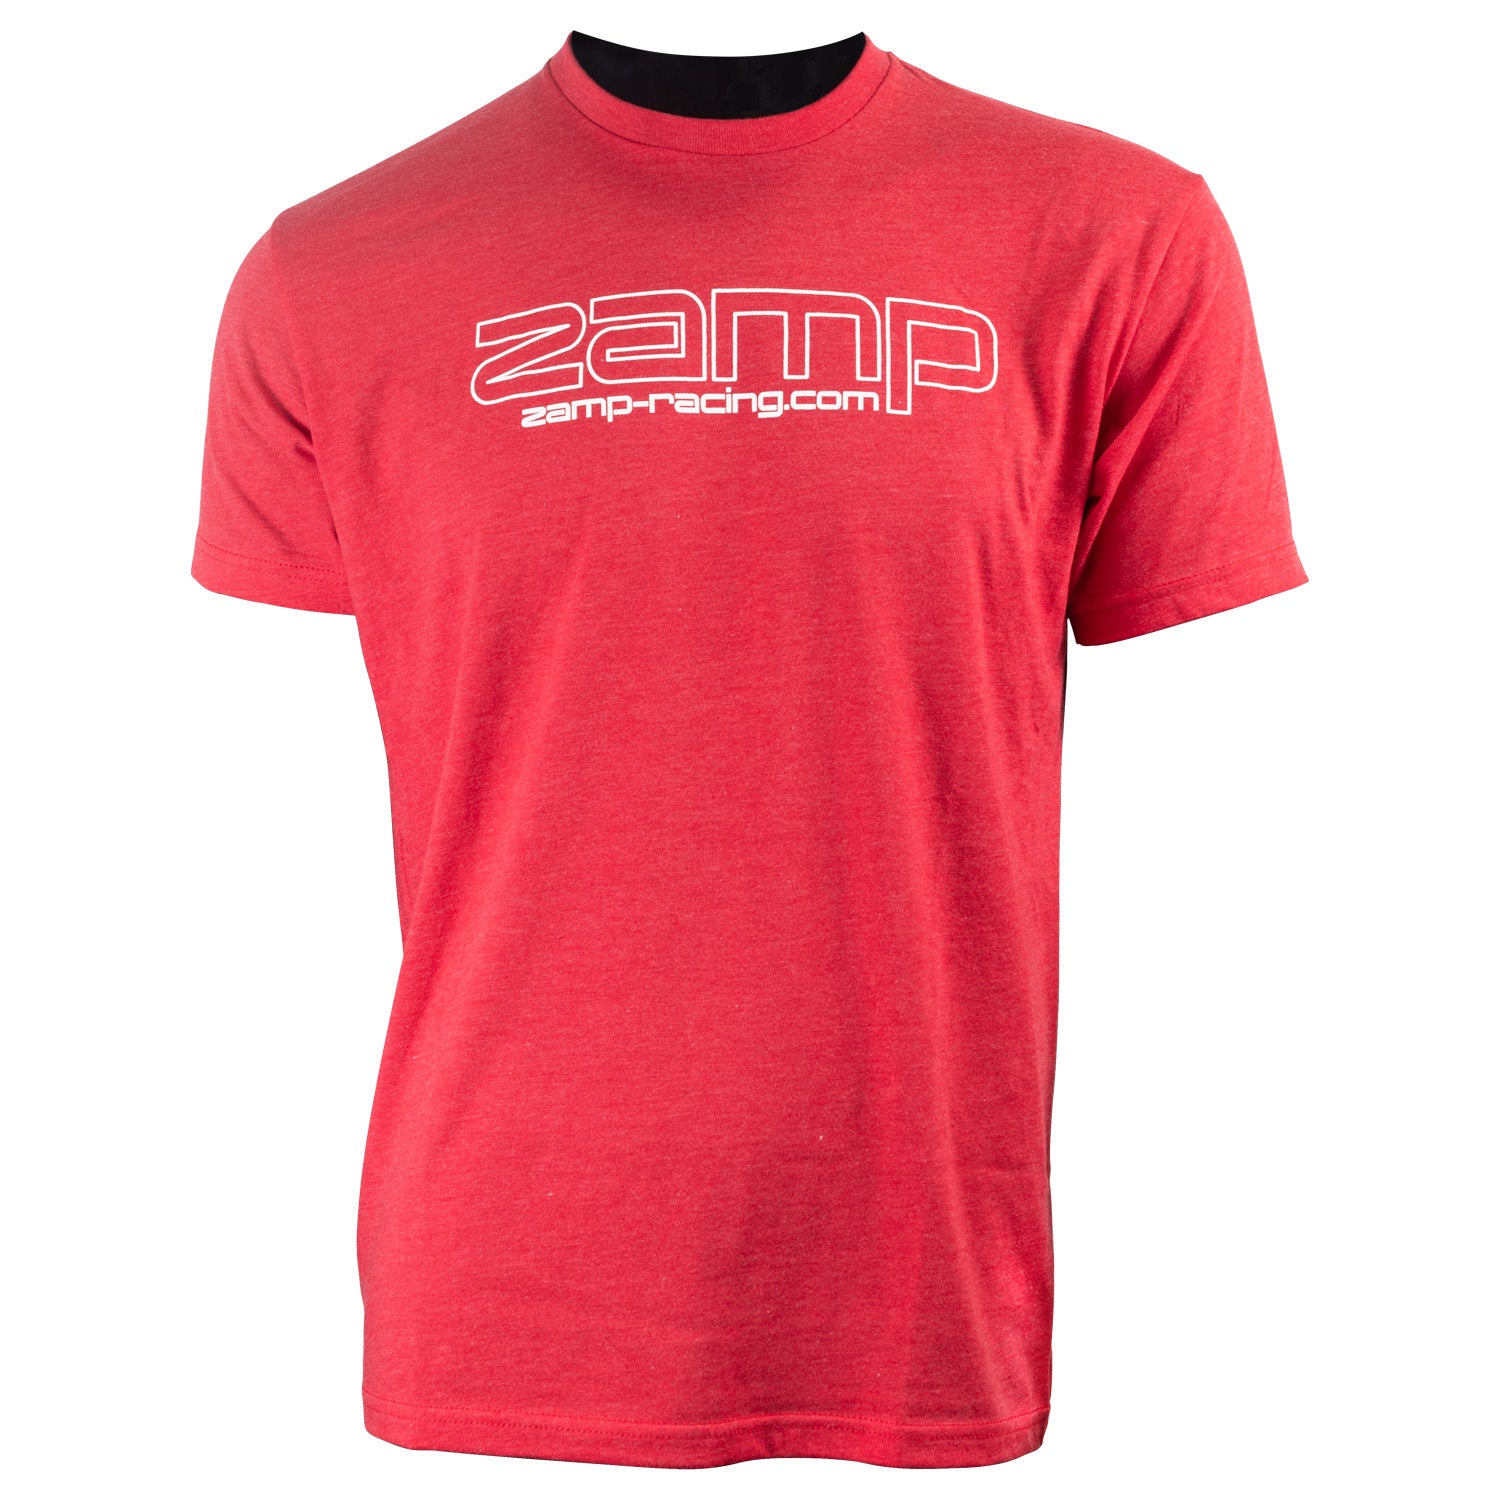 ZAMP Racing T-Shirt Red Large N002002L